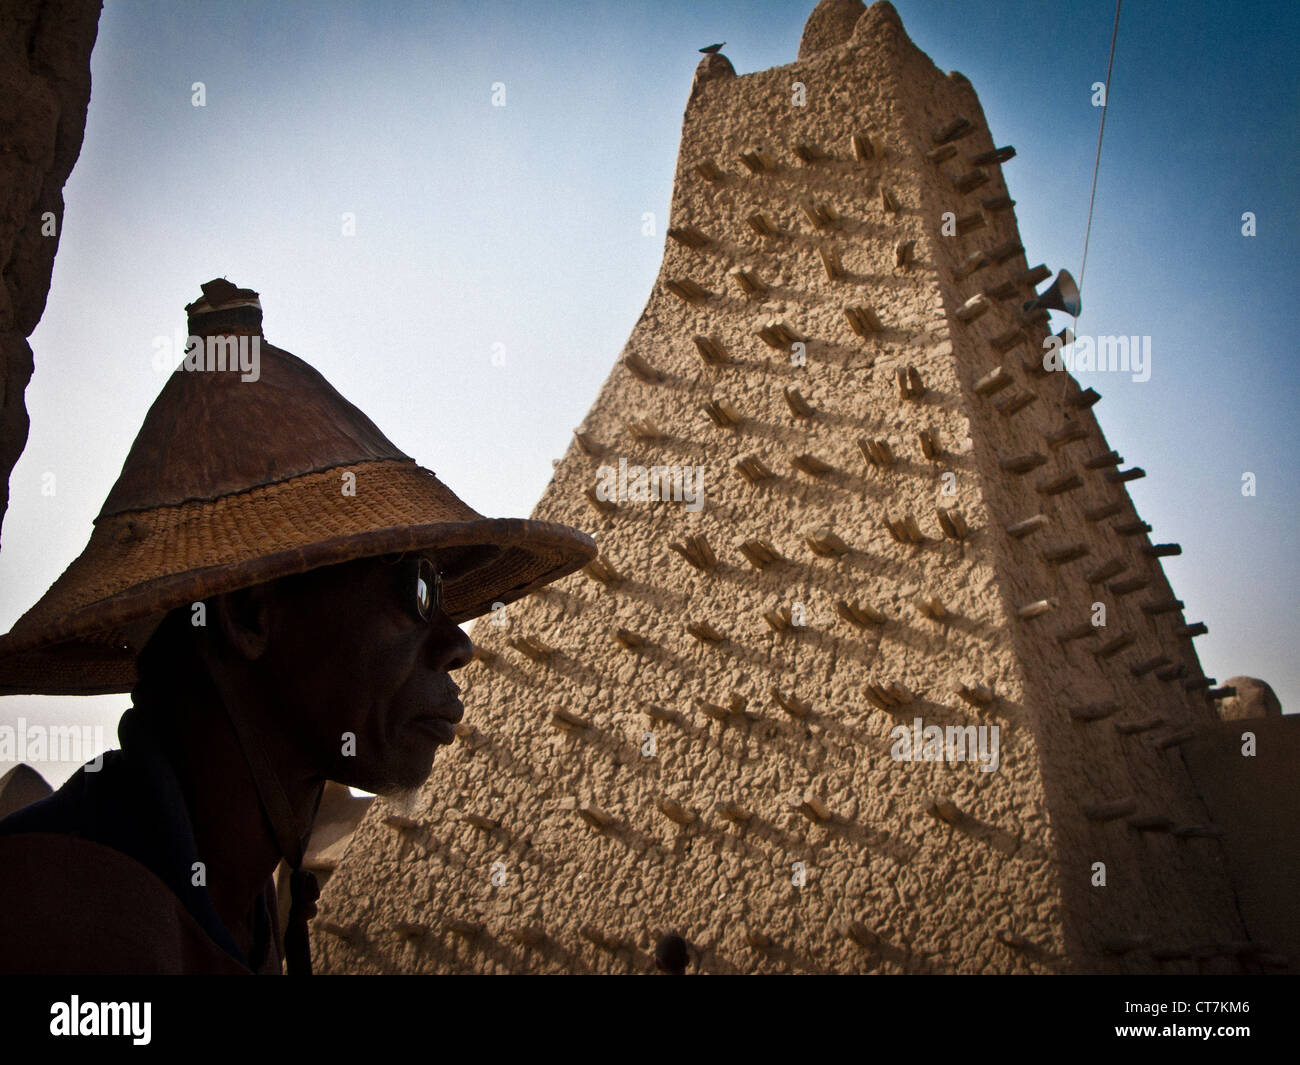 Sankore mosque.Built in 15th-16th centuries . Timbuktu city. Timbuktu region. Mali. Stock Photo